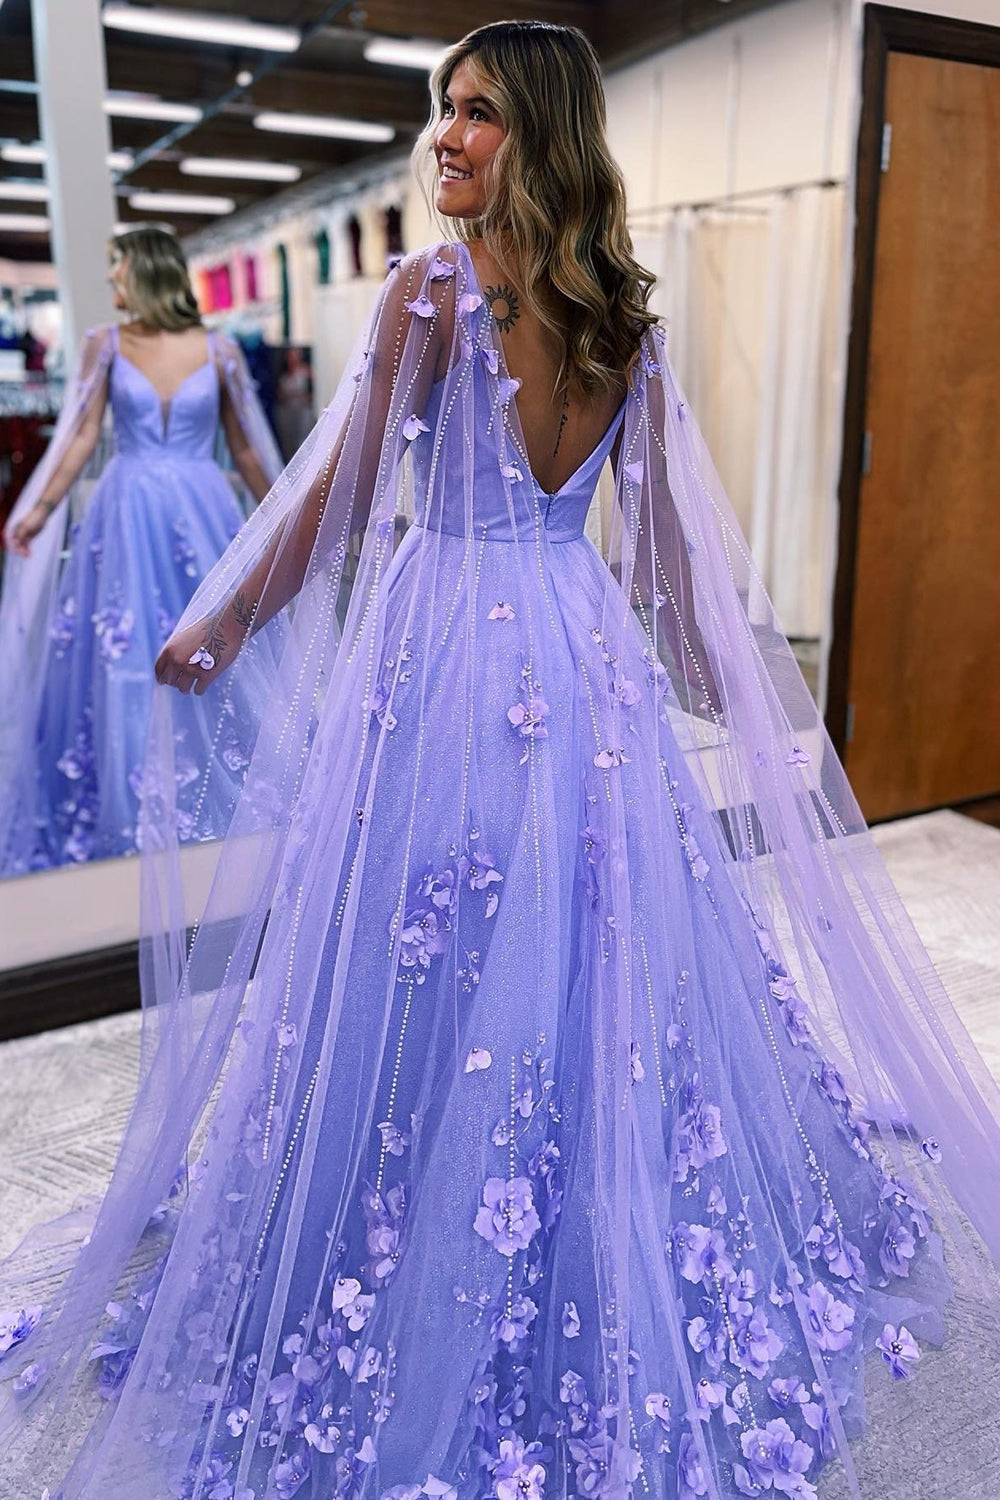 lavendar dress